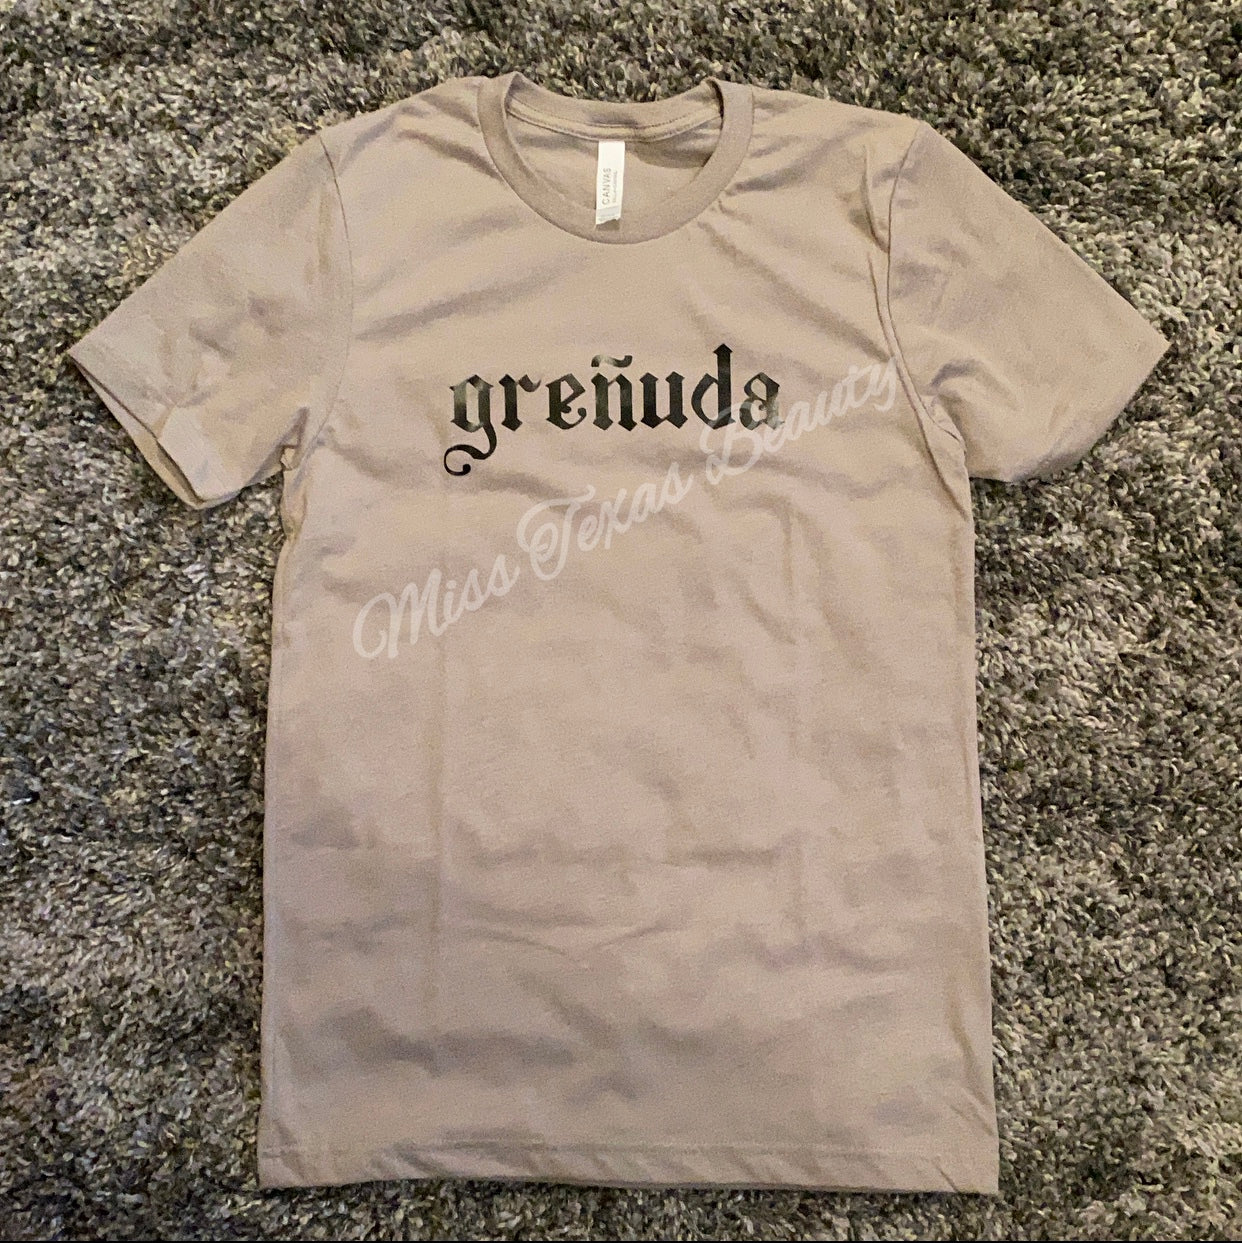 Grenuda T-shirt